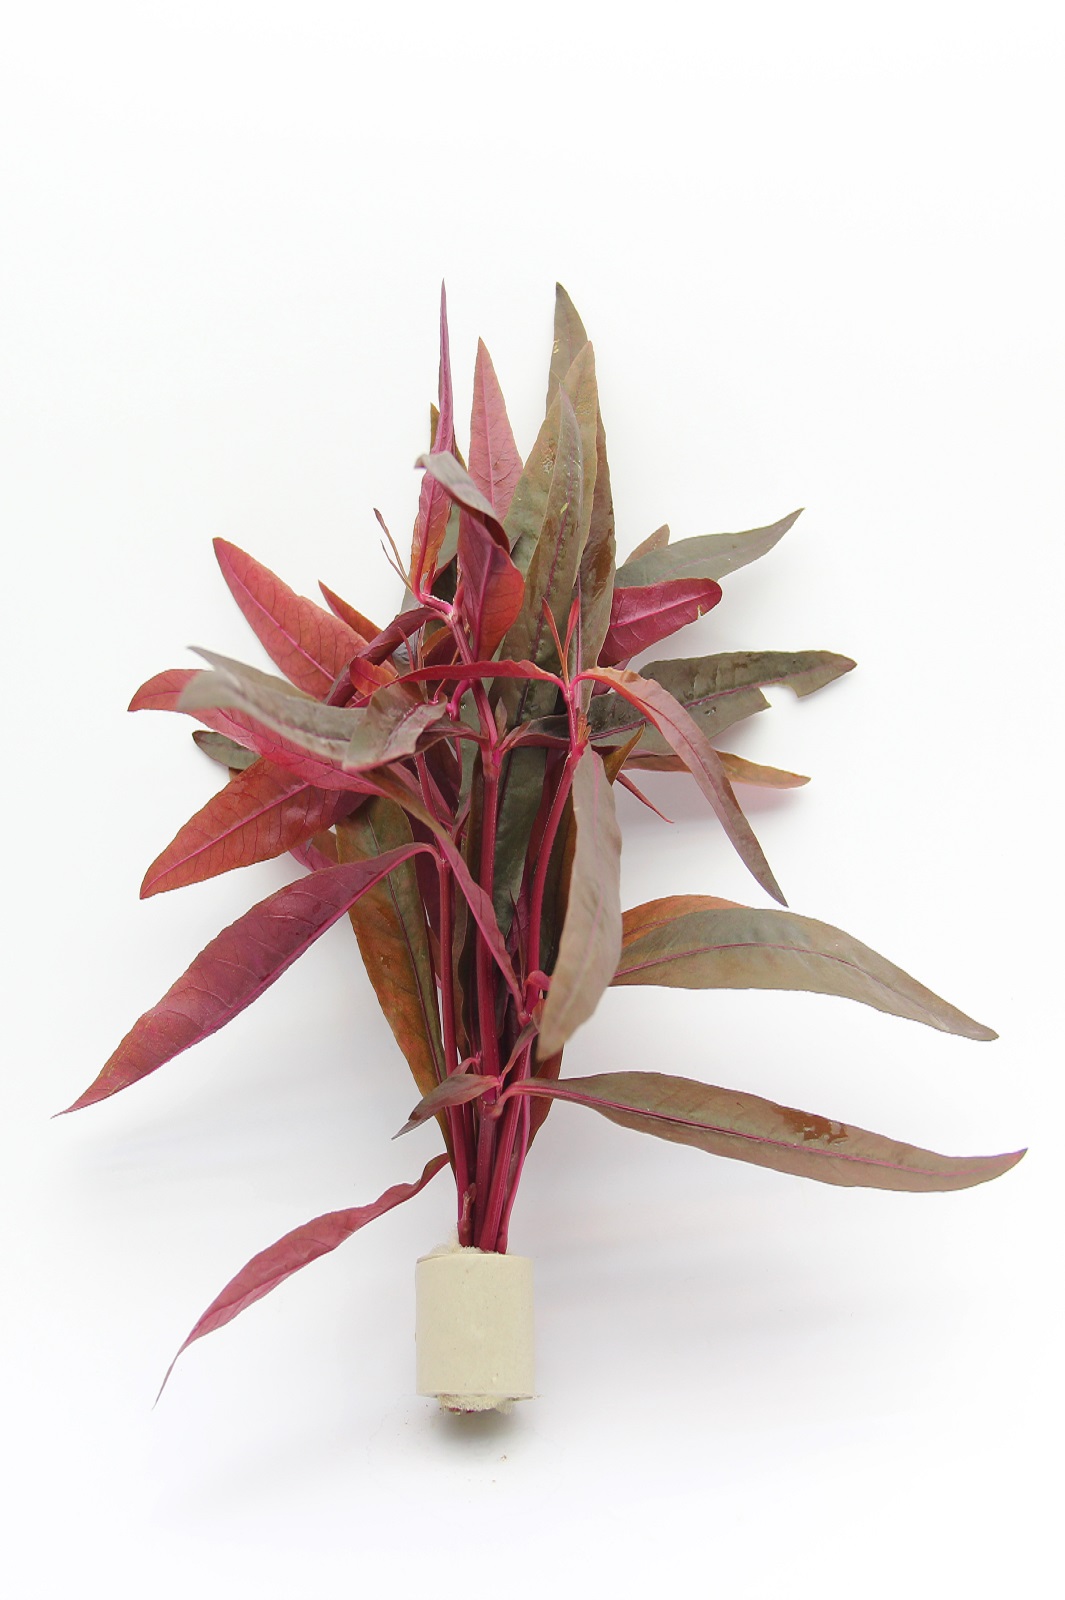 Alternanthera reinecki Lilas 1 Tonring  Papageienblatt  Aquariumpflanze